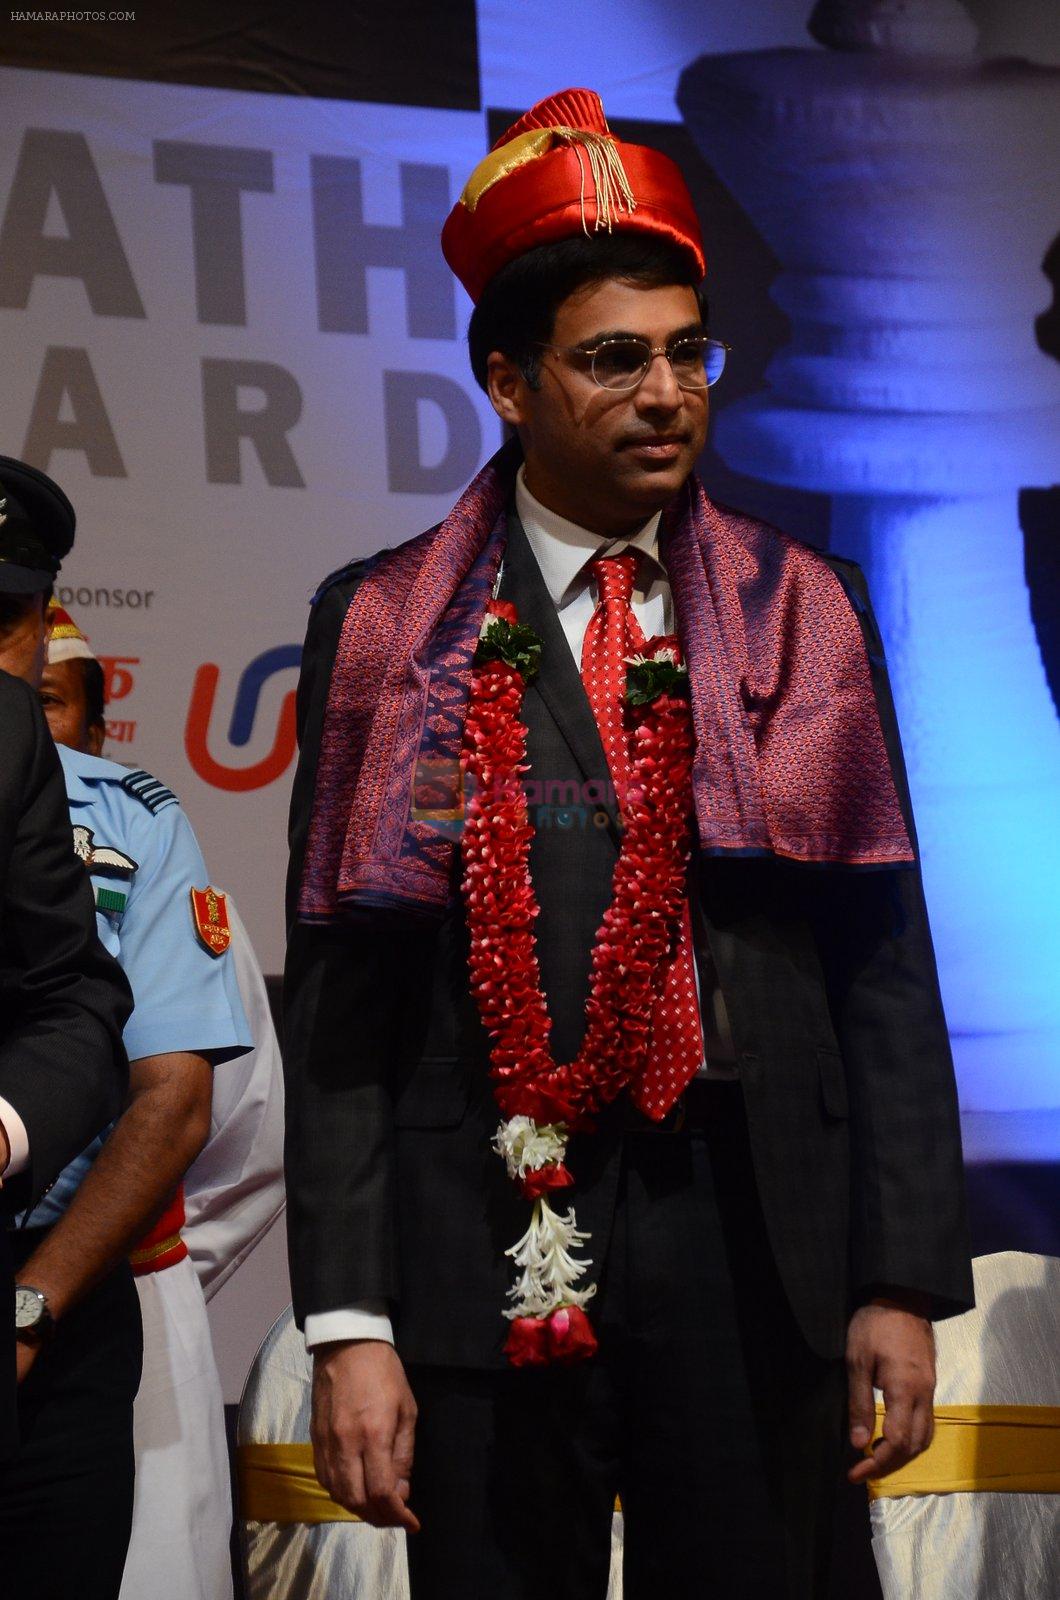 Viswanathan Anand at Hridaynath Mangeshkar Award on 12th April 2016